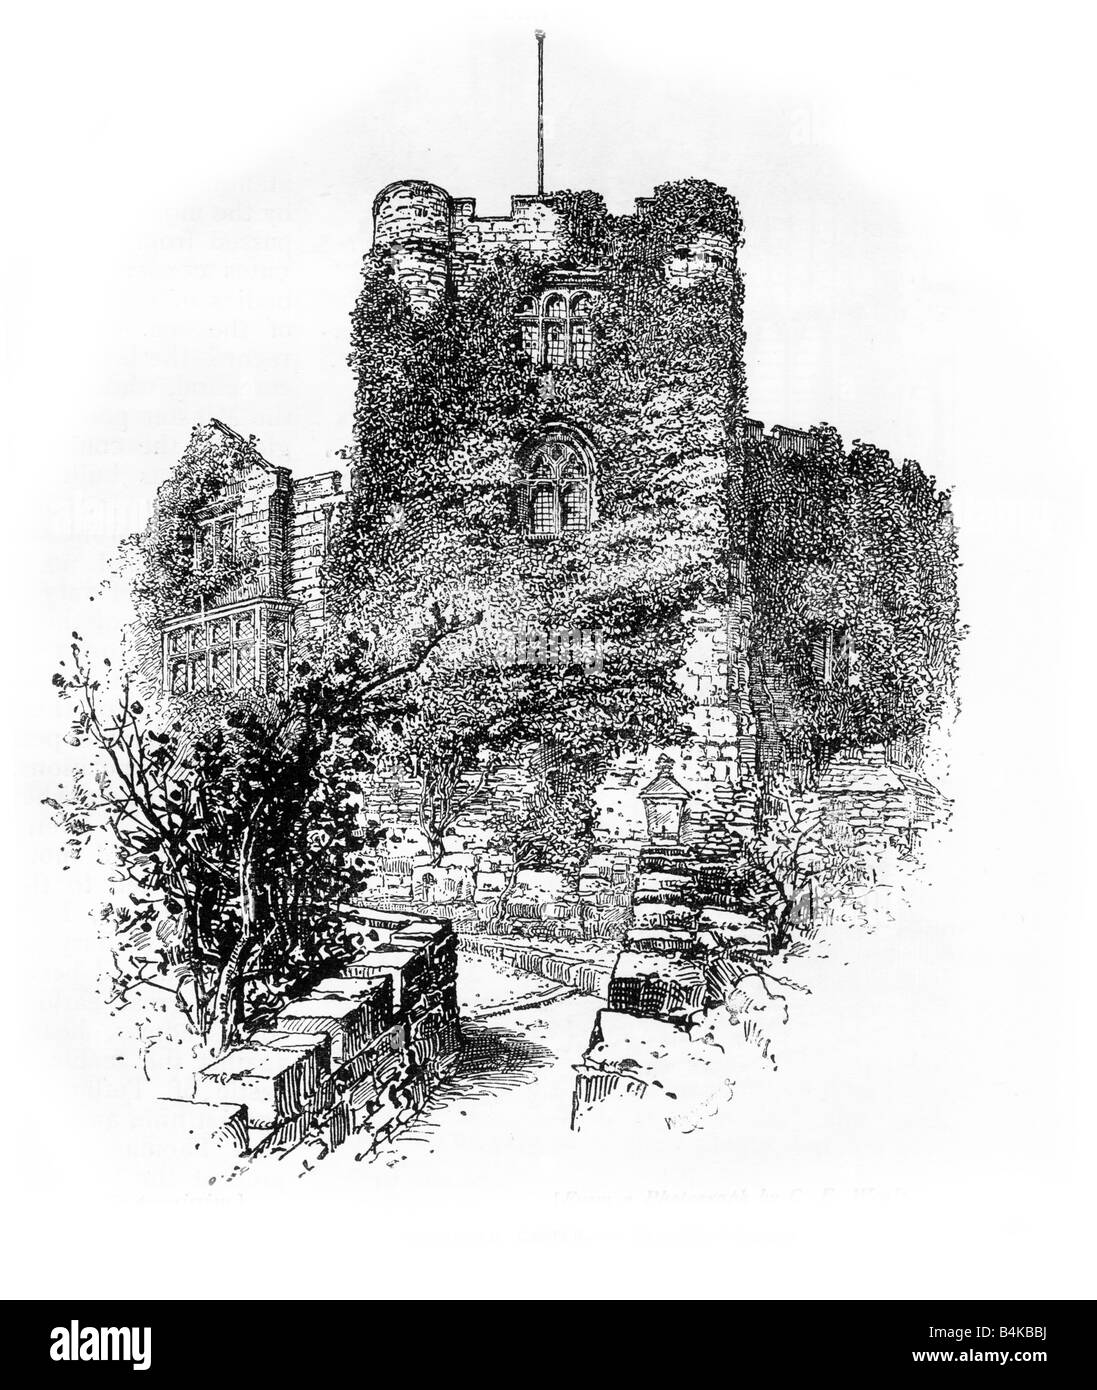 Tamworth Castle Illustration vers 1890 Banque D'Images